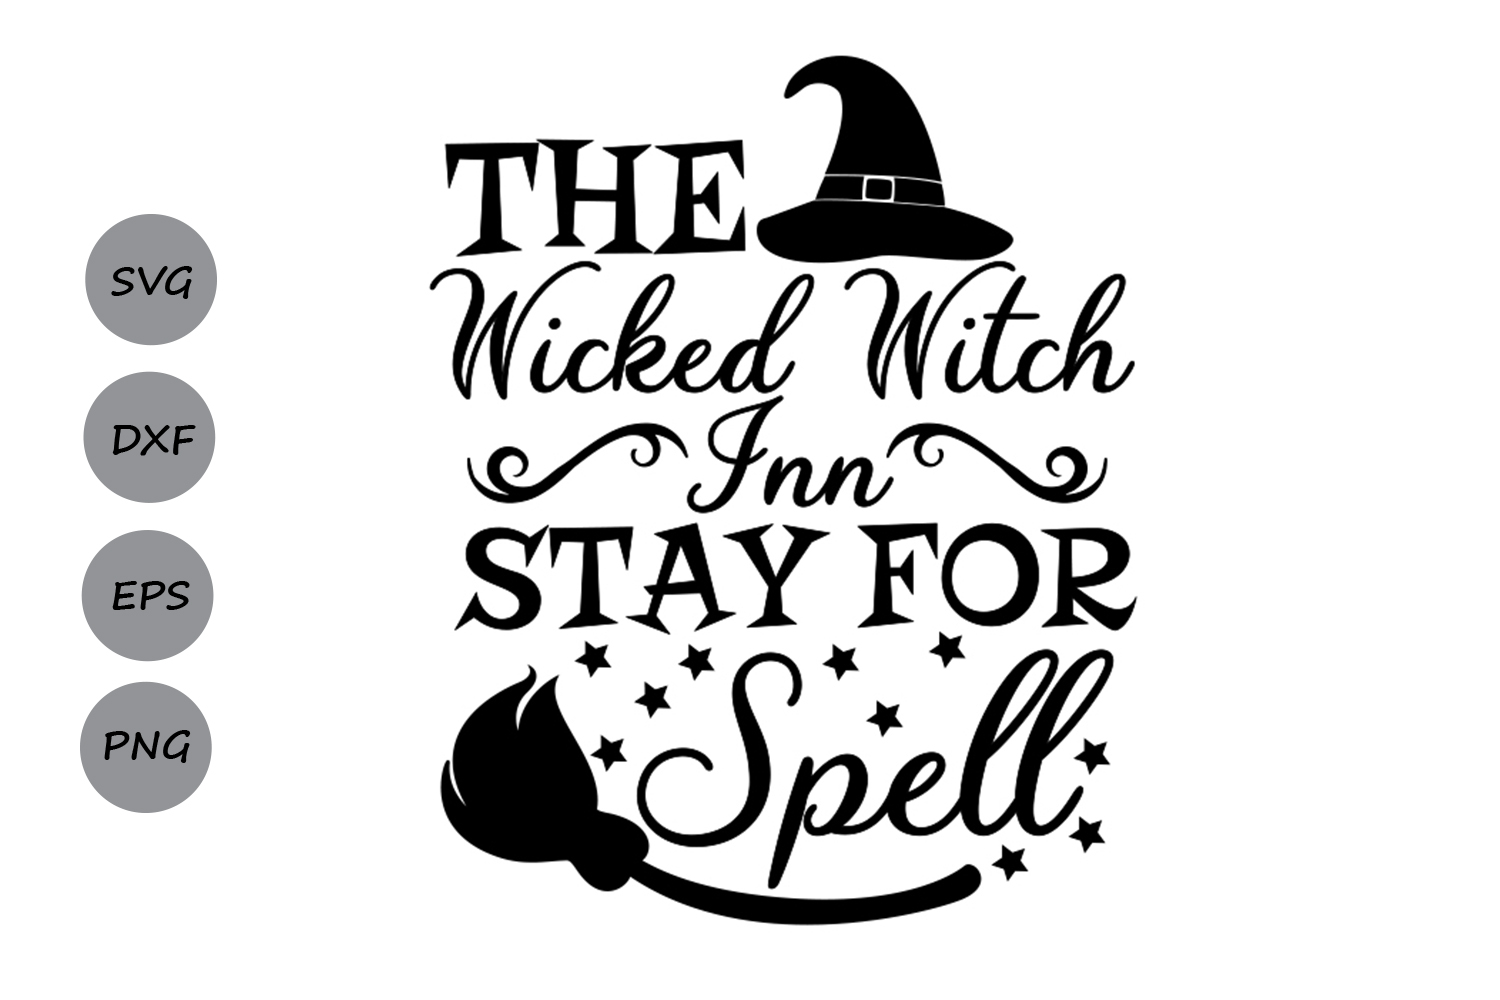 Wicked Witch Inn svg, Halloween svg, witch svg, spooky svg.